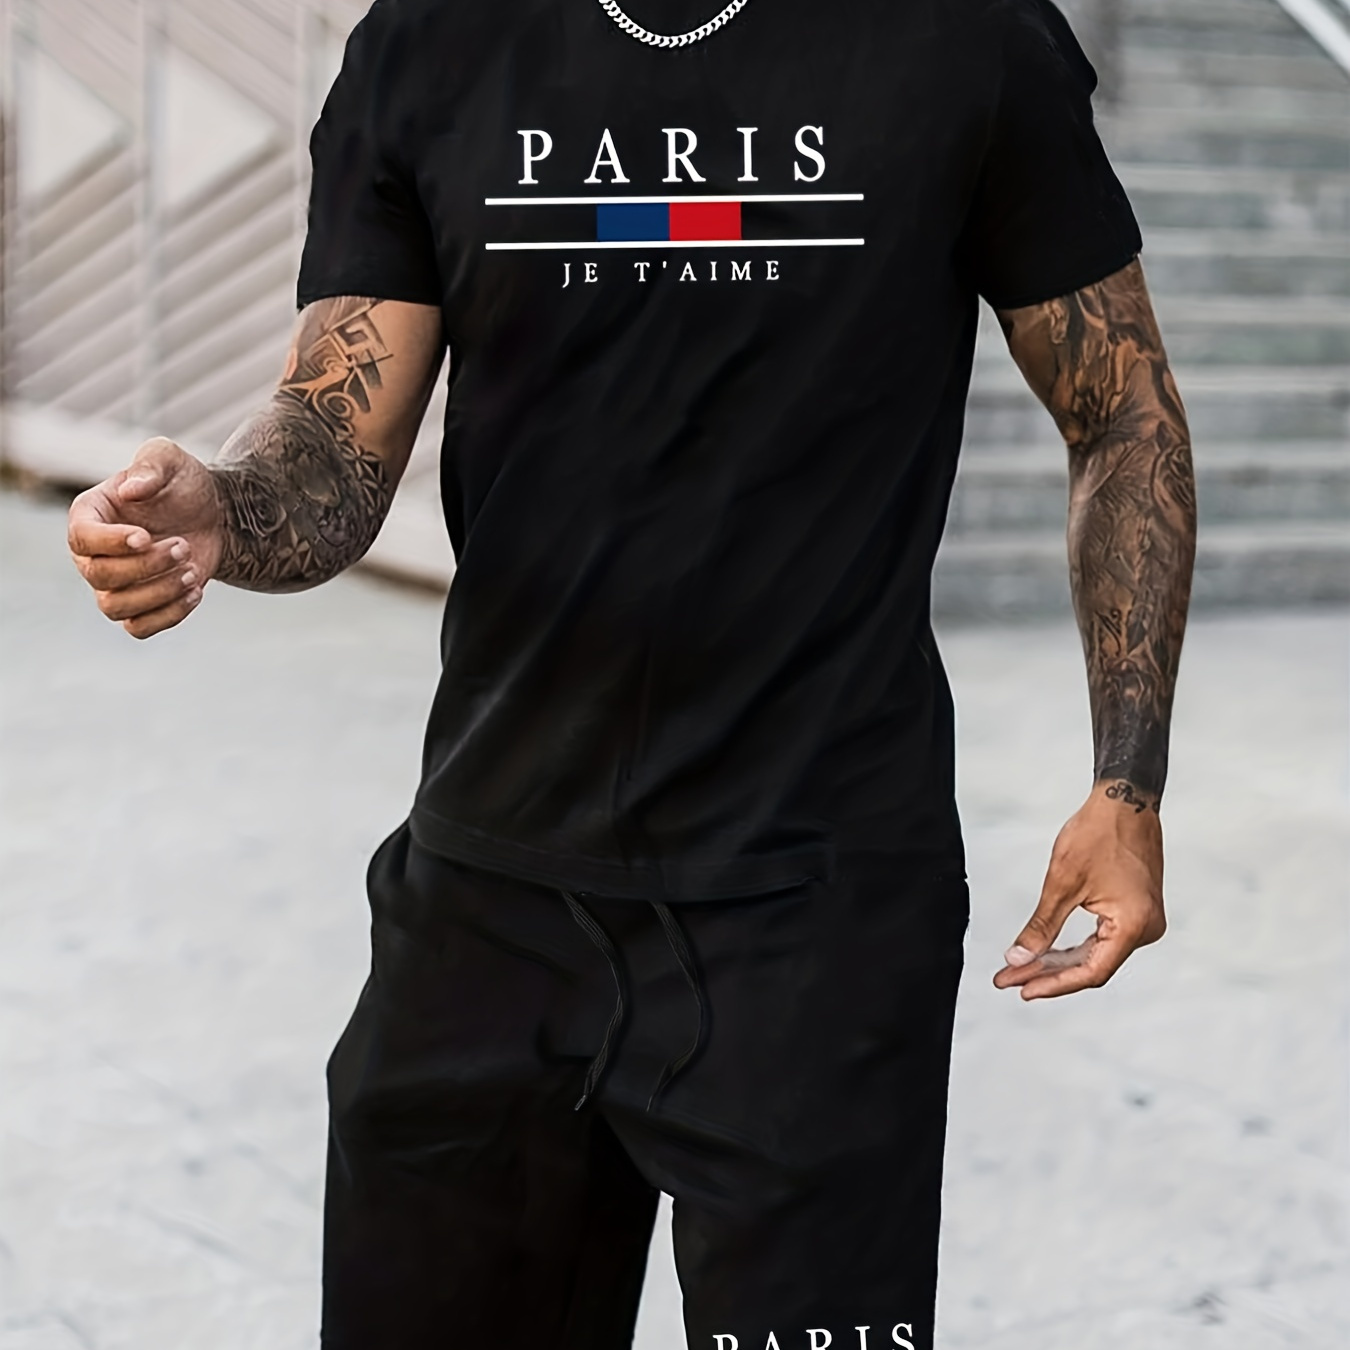 

Paris Print, Men's 2pcs Outfits, Casual Crew Neck Short Sleeve T-shirt And Drawstring Shorts Set For Summer, Men's Clothing Loungewear